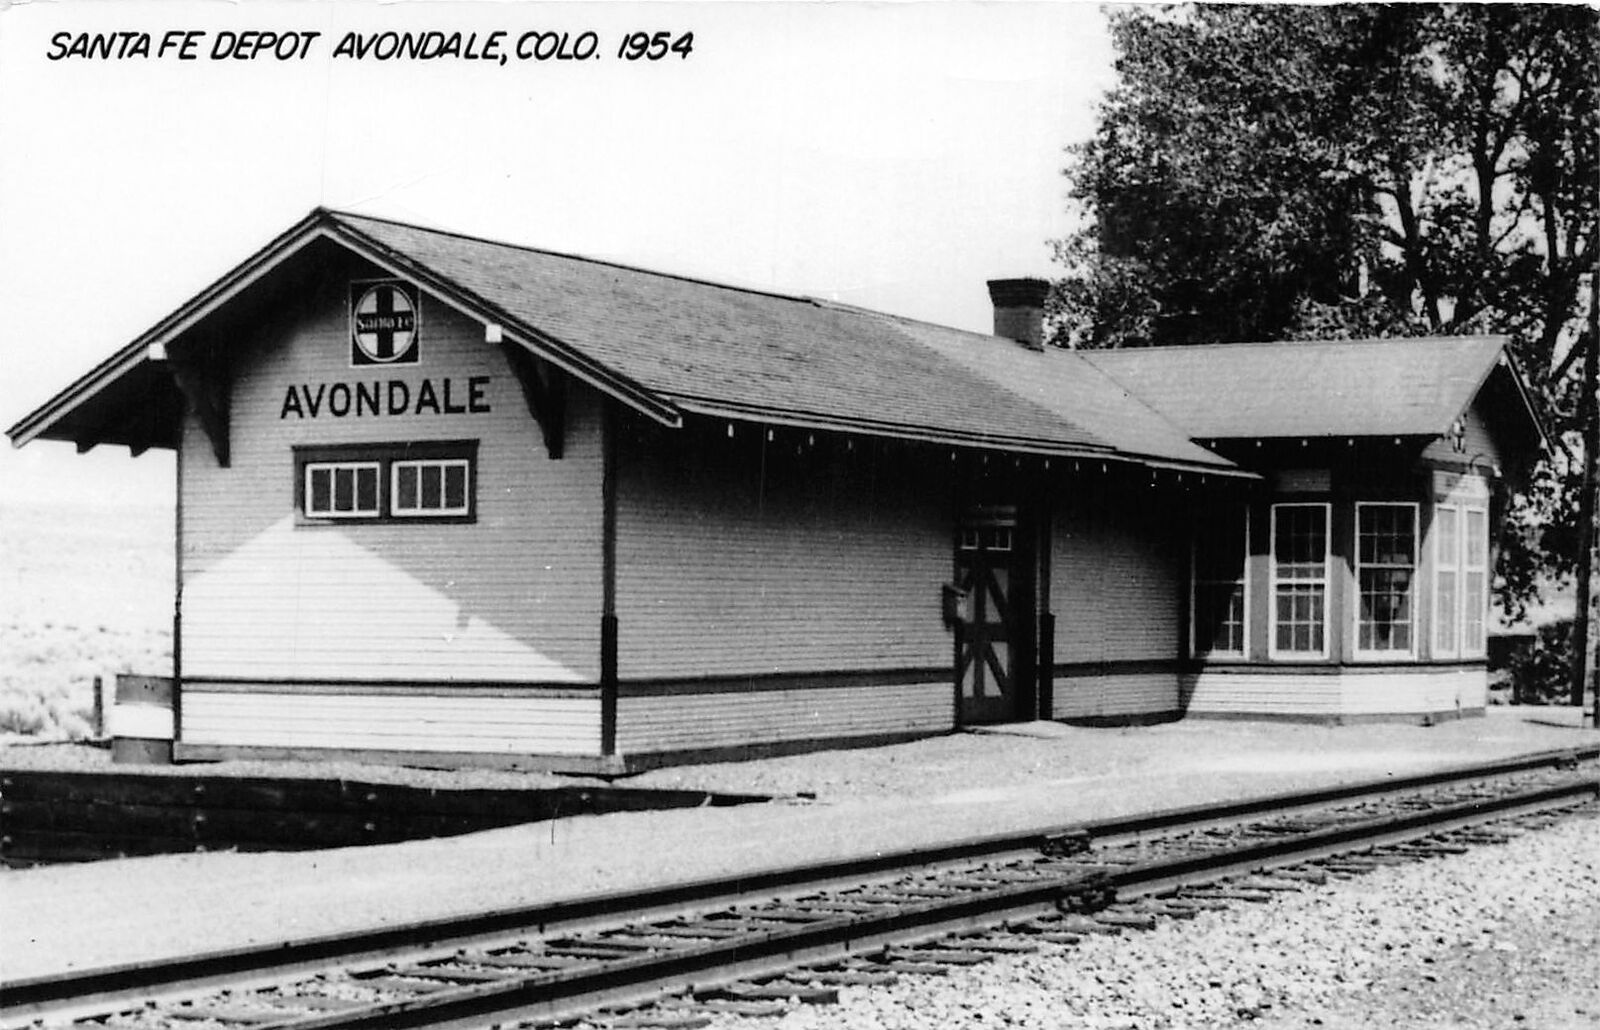 J7/ Avondale Colorado RPPC Postcard c1954 Santa Fe Railroad Depot 163